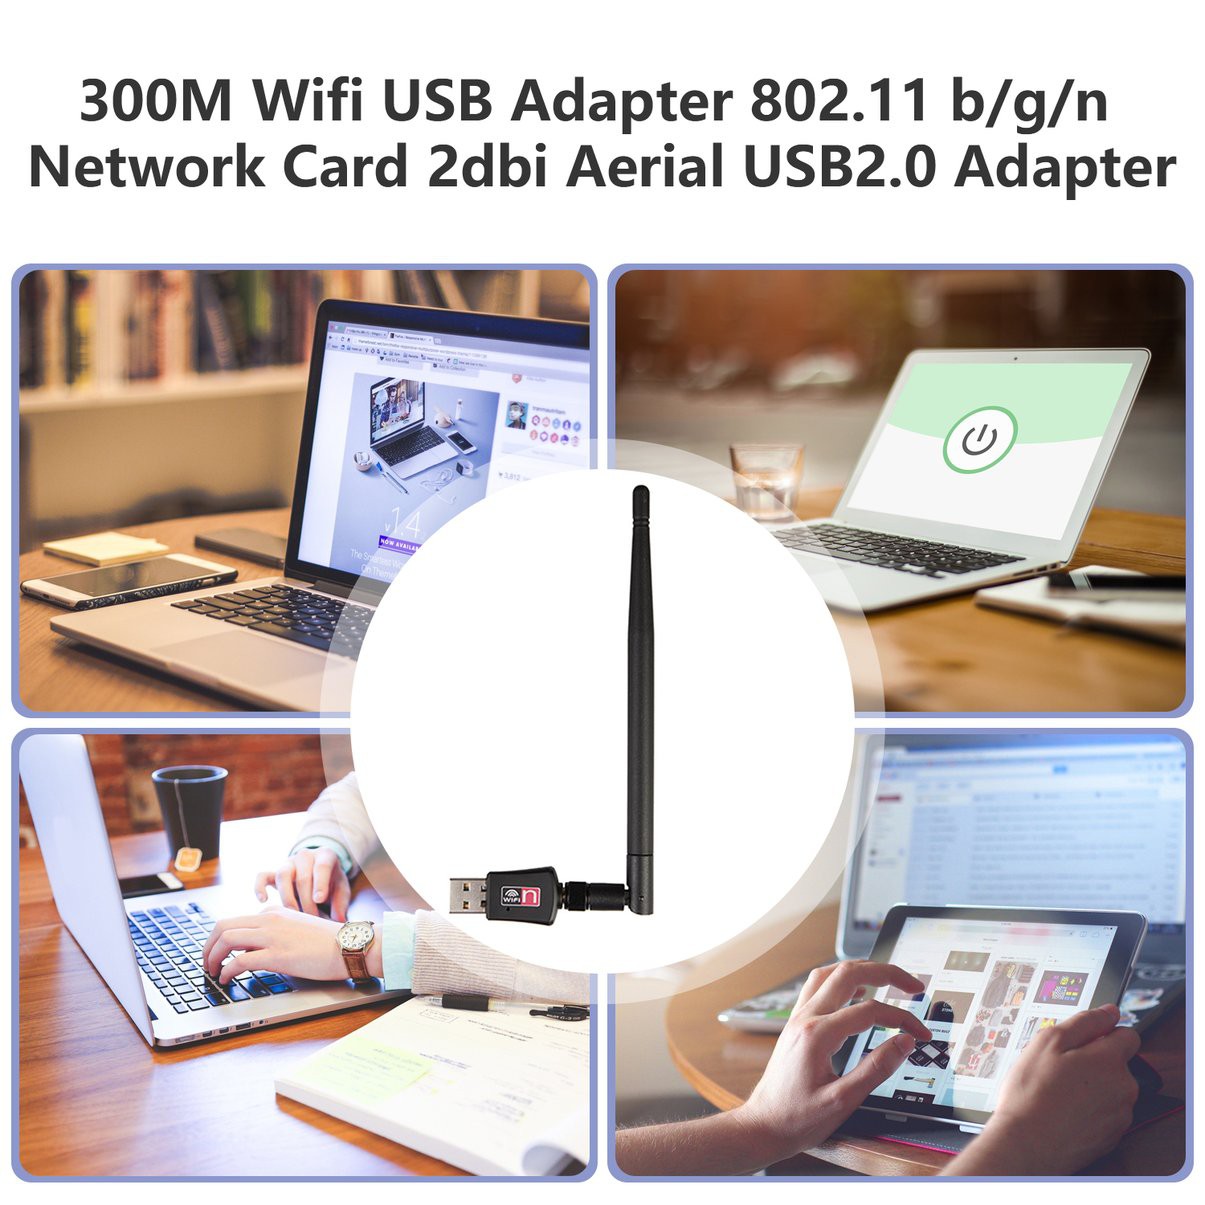 300M Wifi USB Adapter 802.11 b/g/n Network Card 2dbi Aerial USB2.0 Adapter